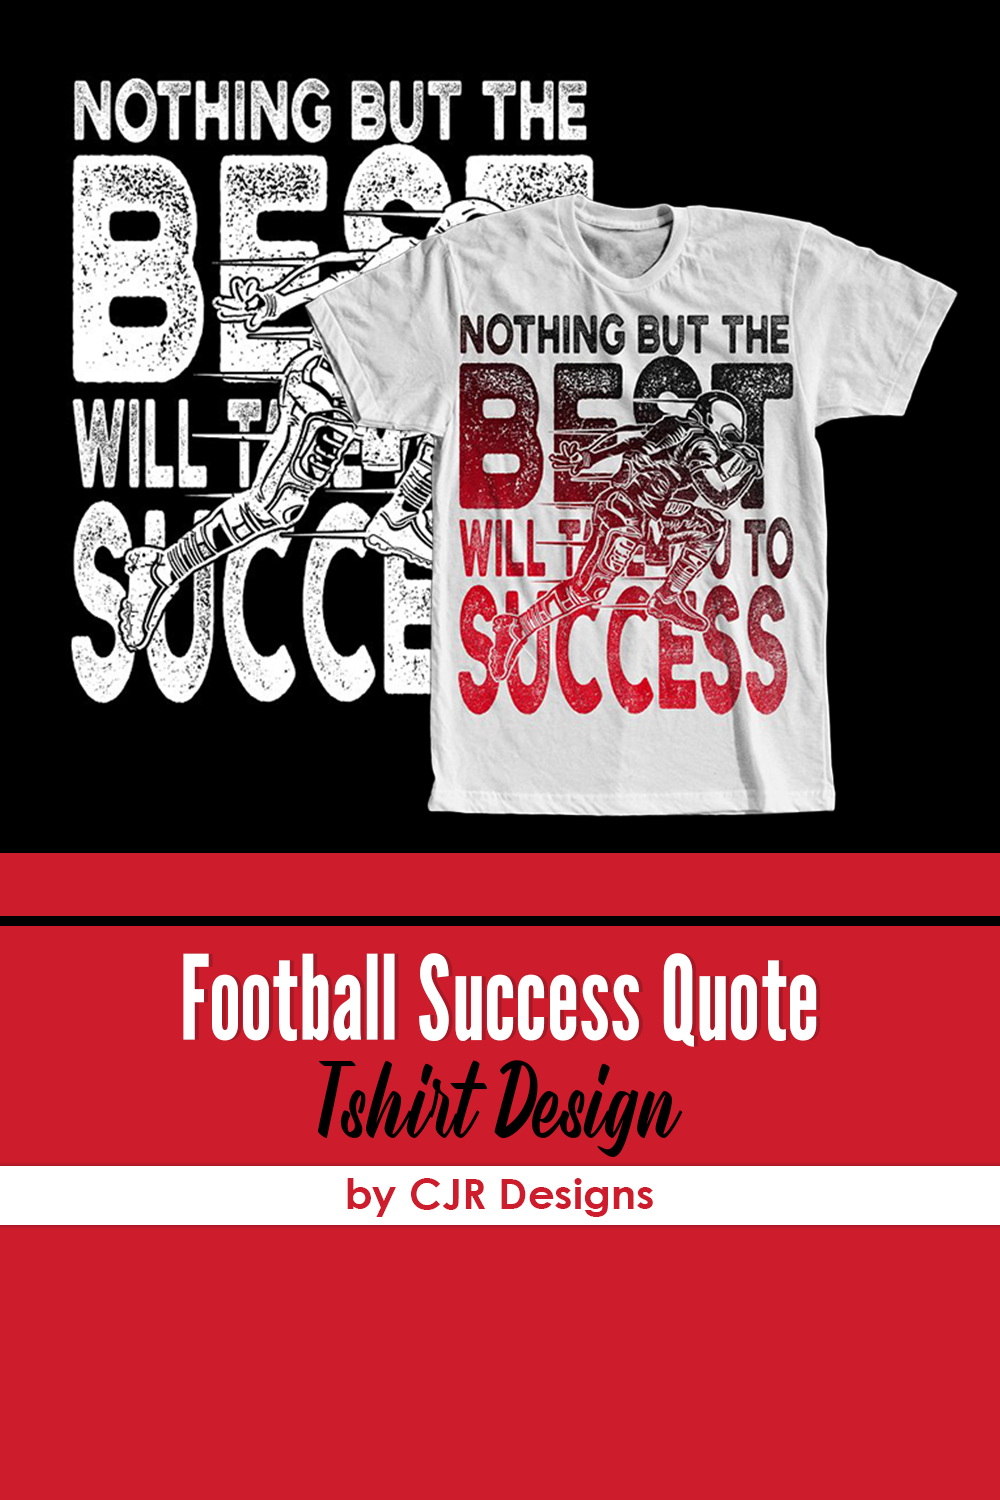 Football success quote tshirt design of pinterest.